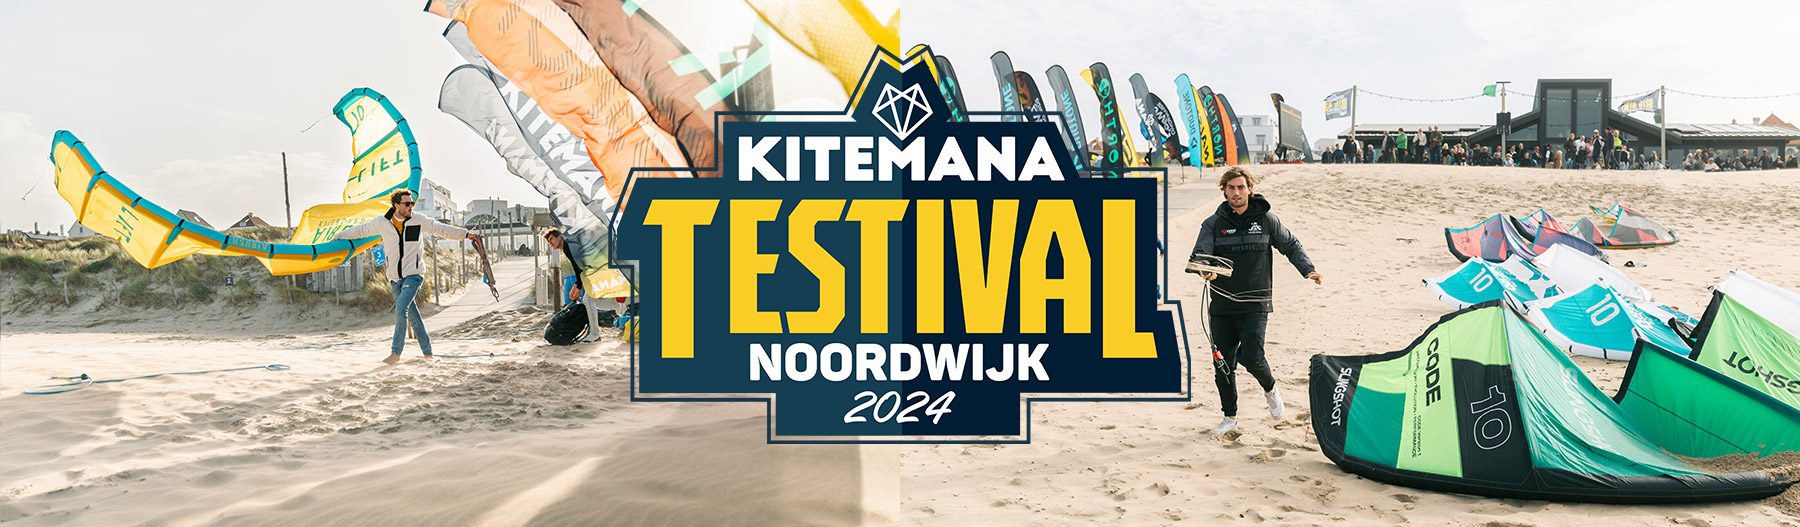 Kitemana Testival 2024<br>Voorjaar 2024, test alle kite gear!